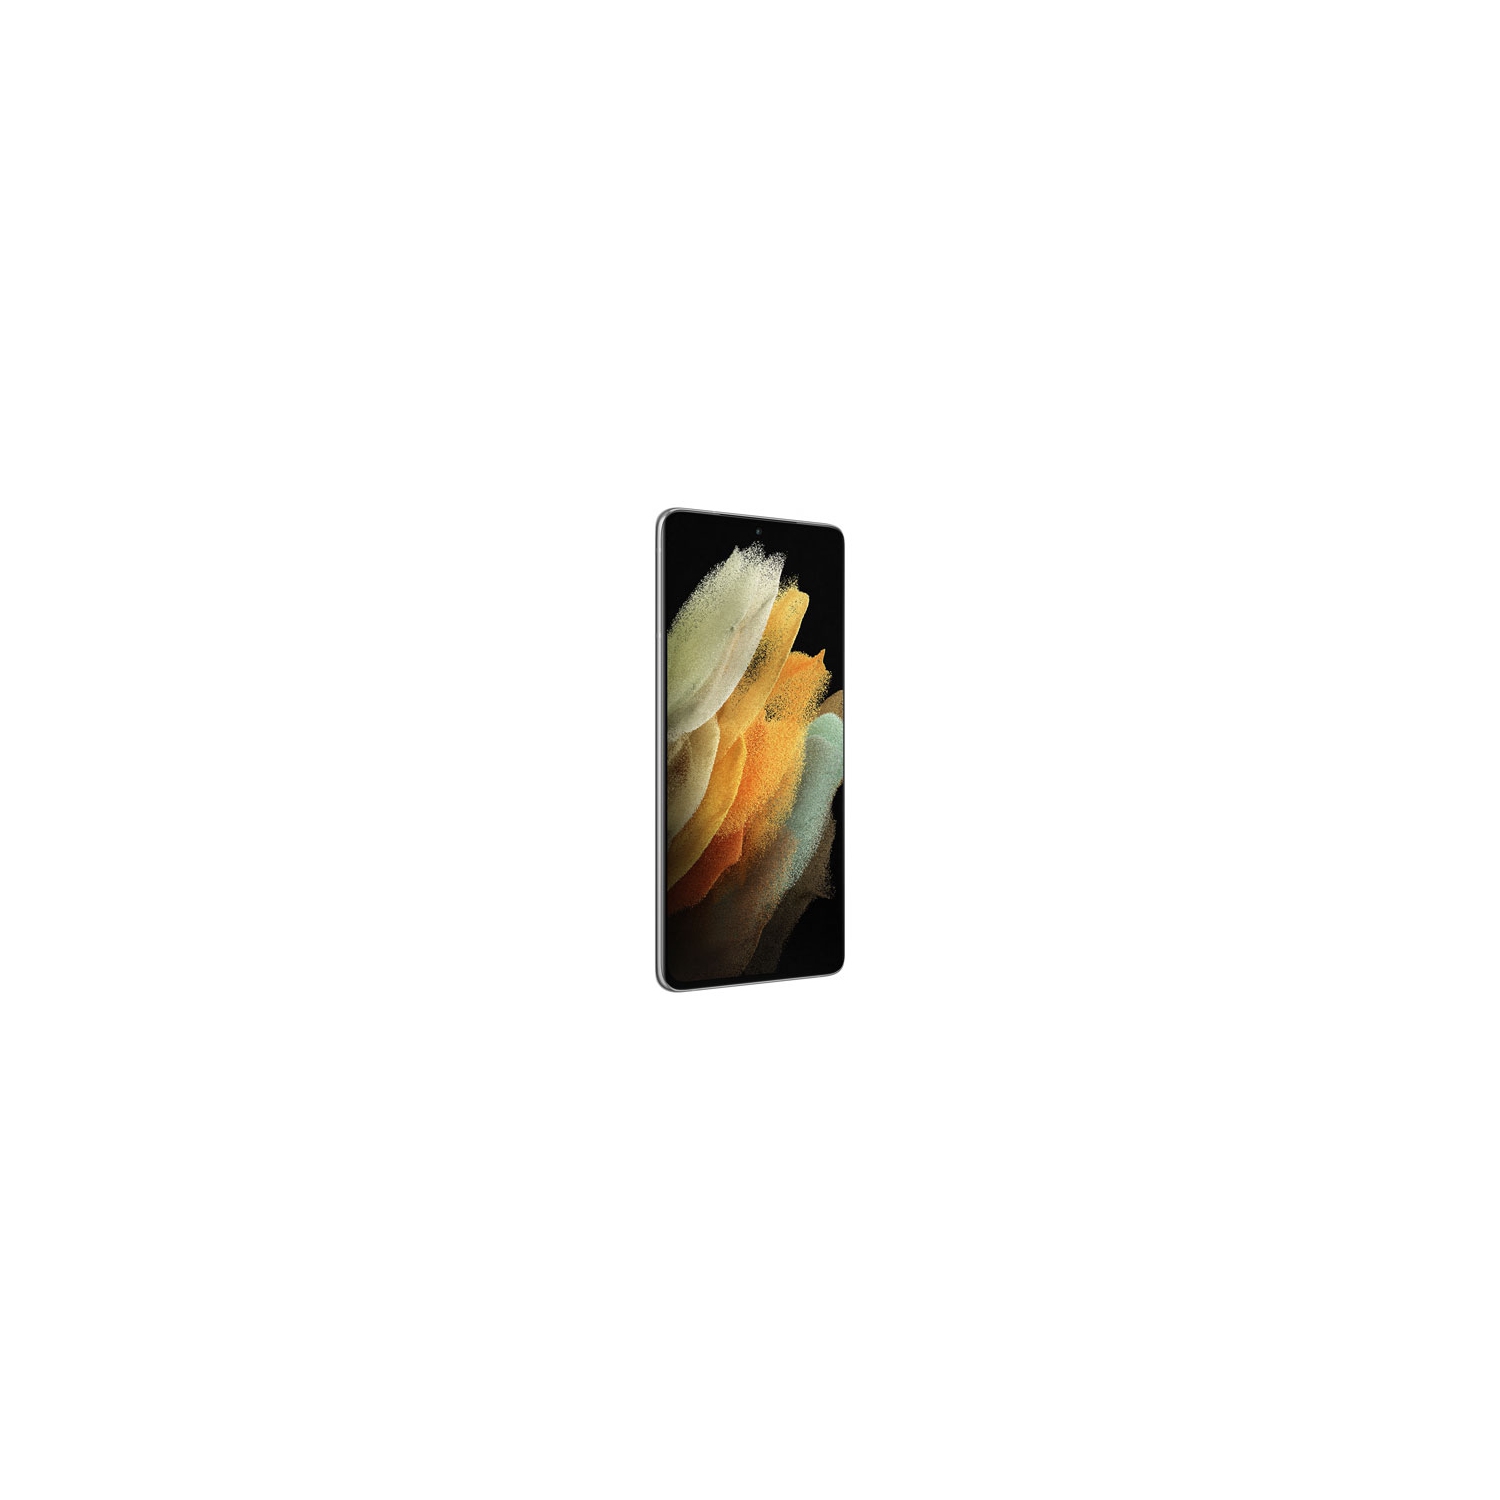 Refurbished (Excellent) - Samsung Galaxy S21 Ultra 5G 256GB - Phantom Silver - Unlocked